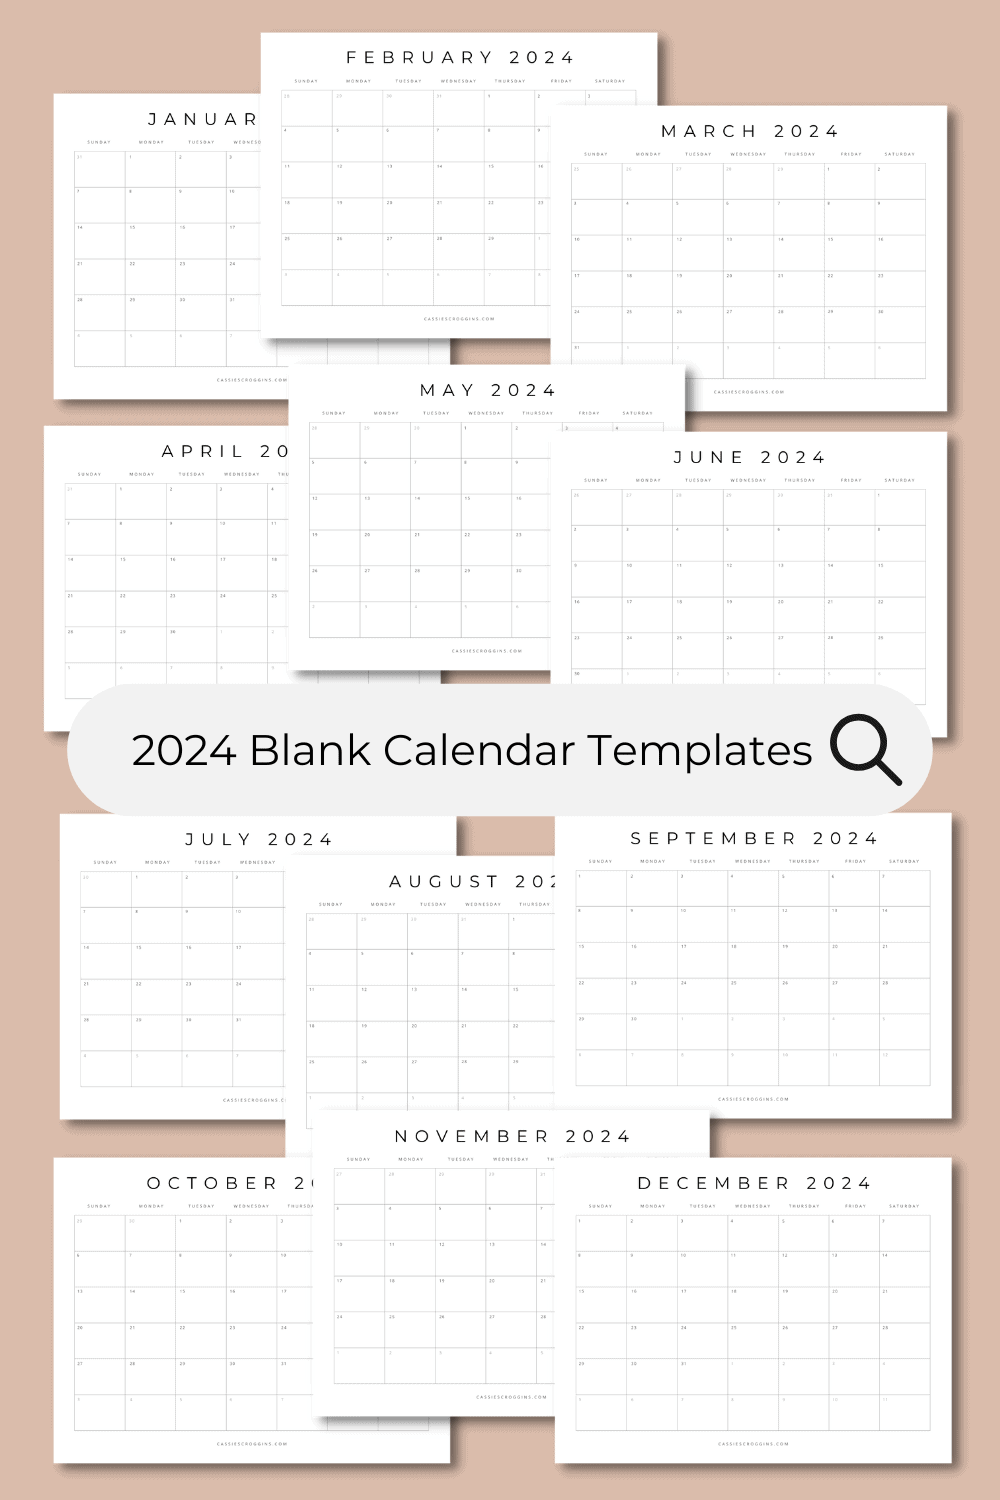 Free Printable 2024 Blank Calendar Templates (All 12 Months) within Free Printable Blank Month Calendar 2024